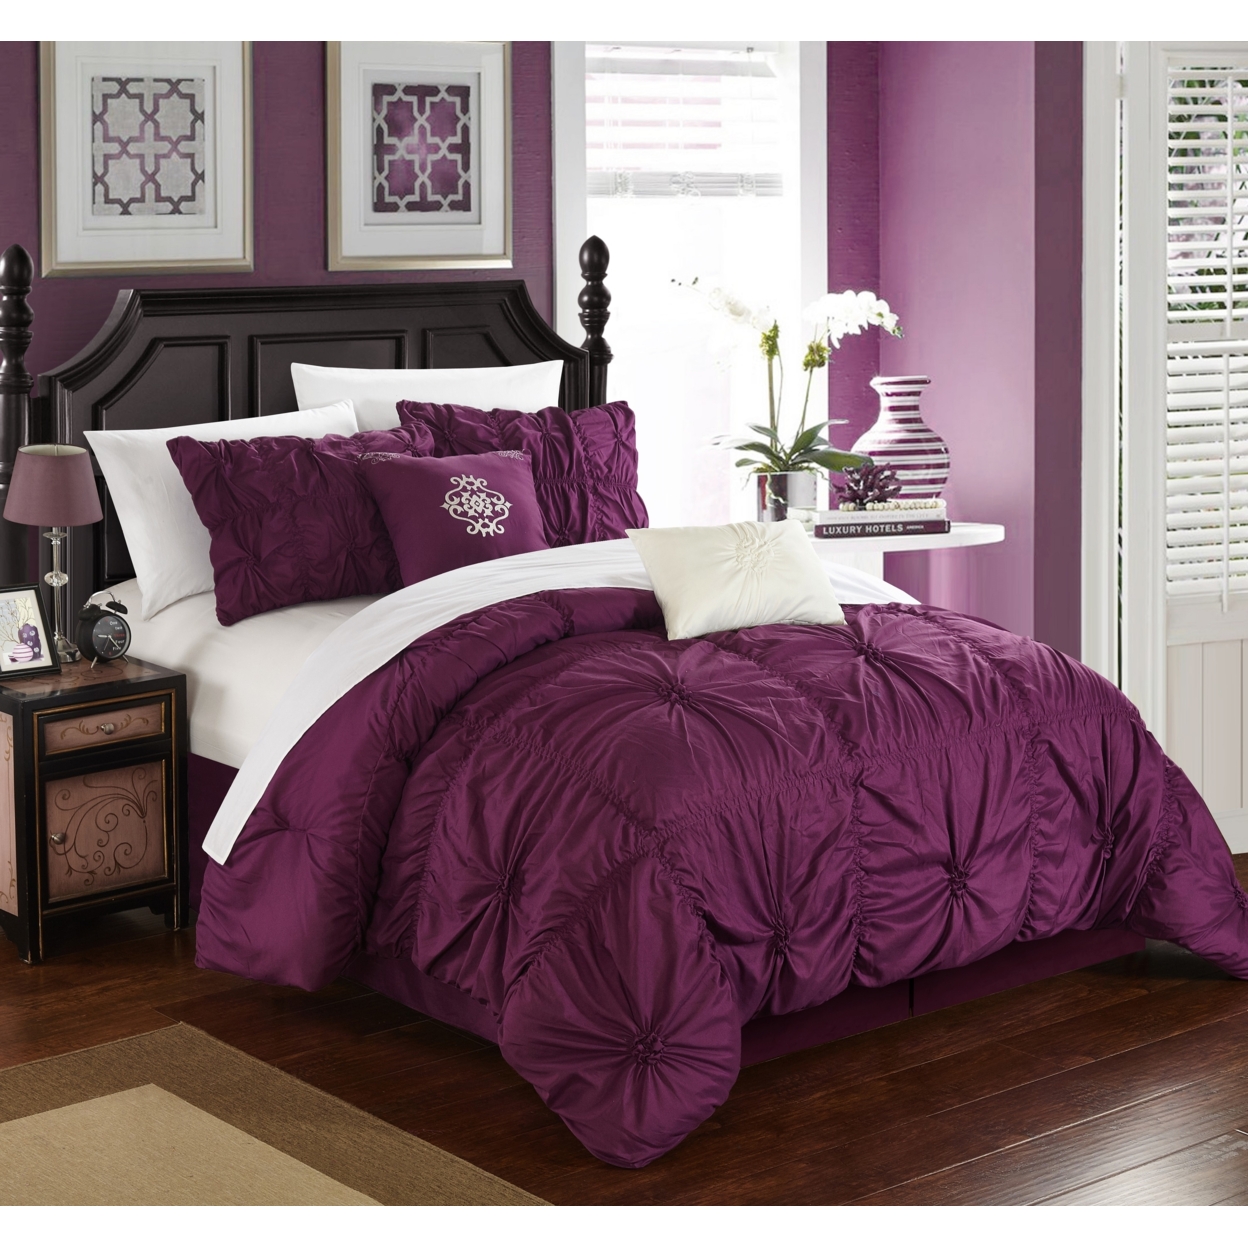 Chic Home 6 Piece Hilton Floral Pinch Pleat Ruffled Designer Embellished Comforter Set - Navy, King